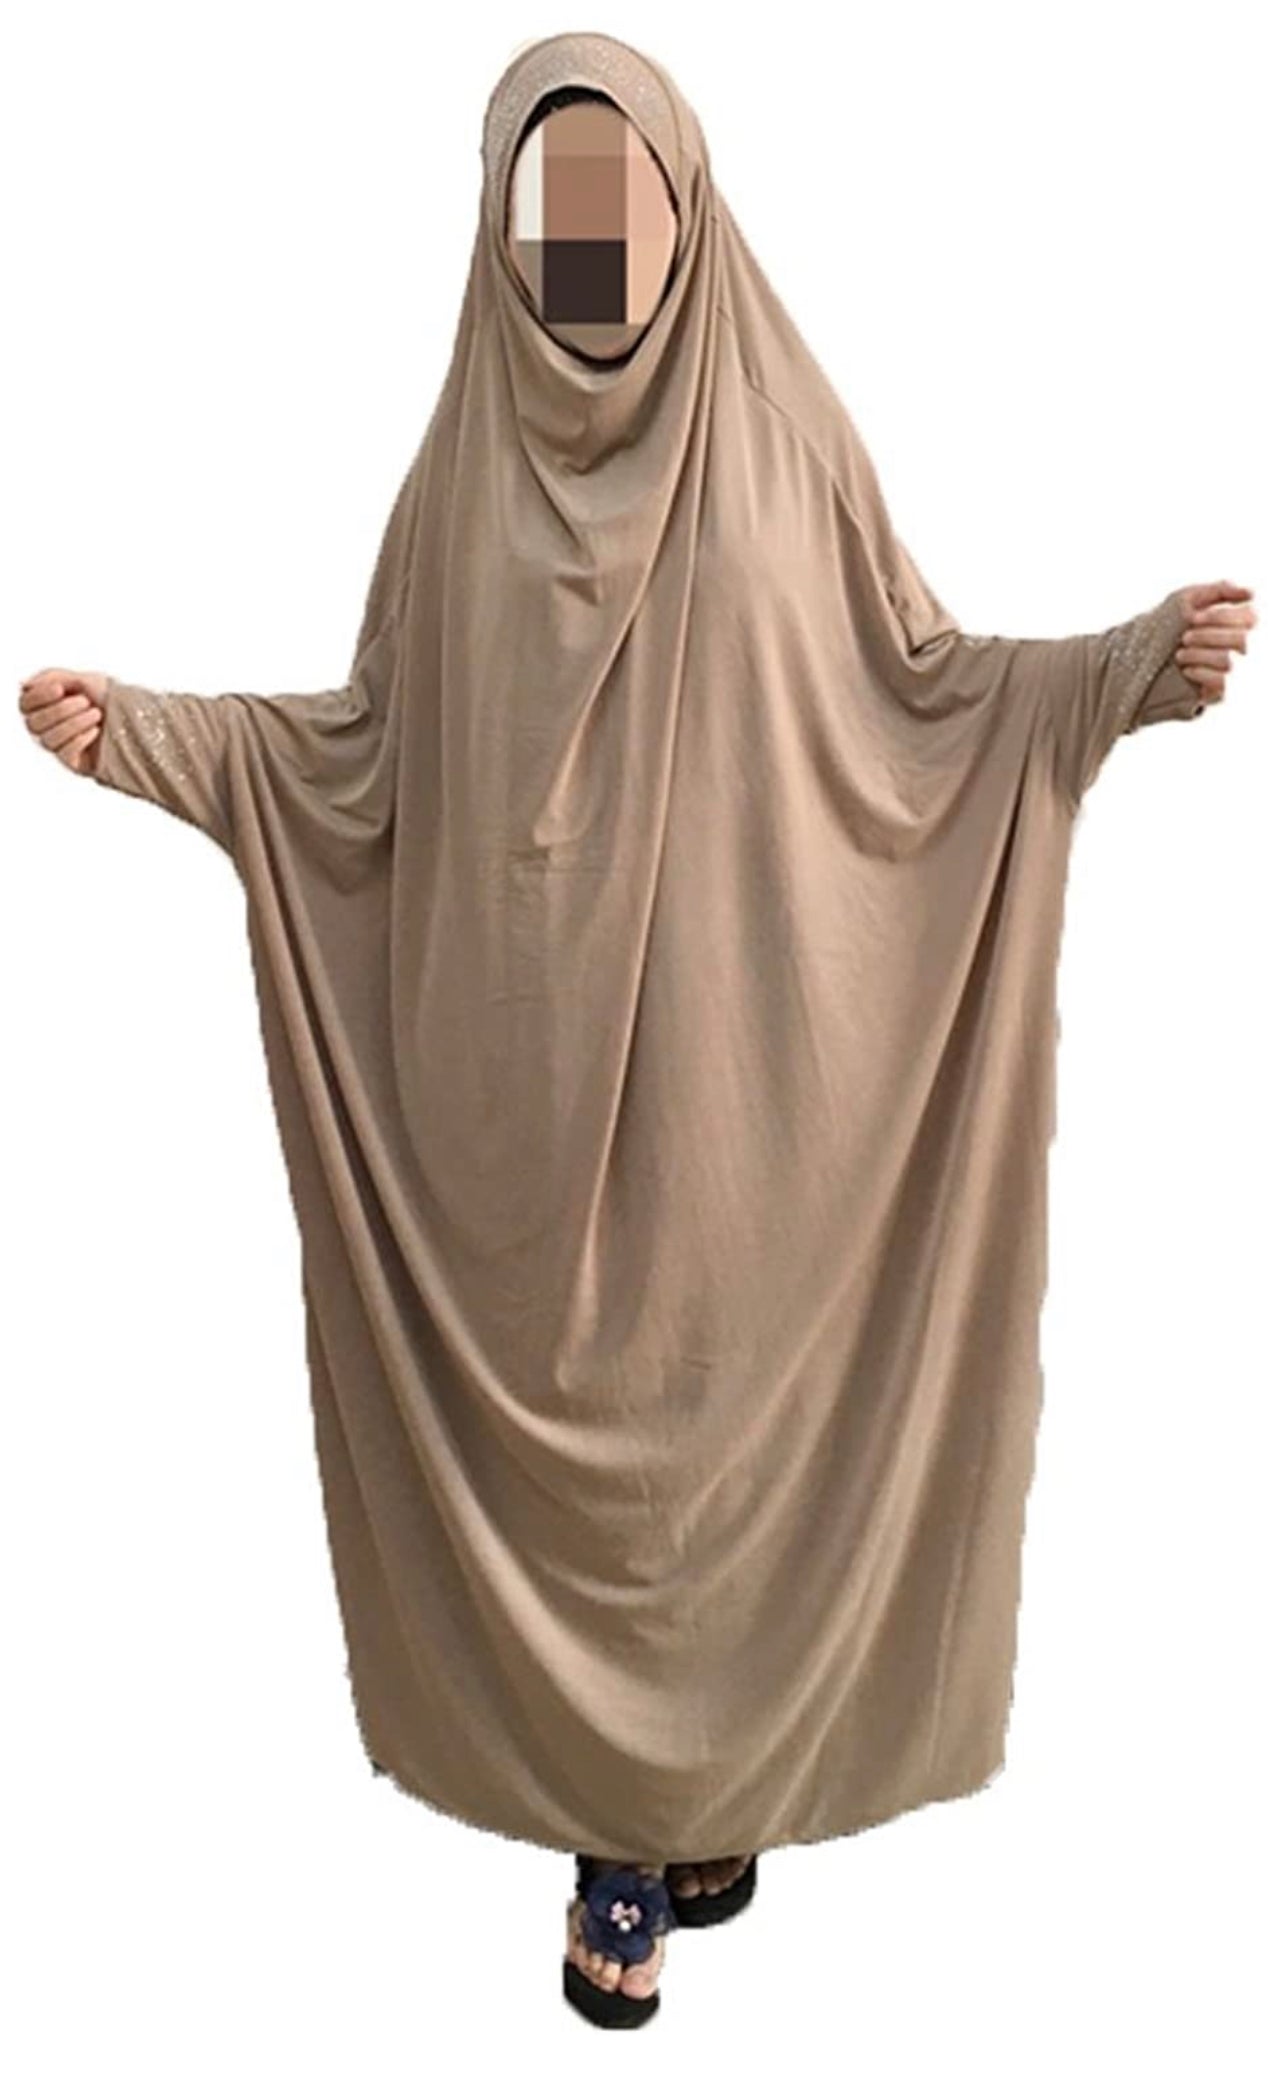 EMPIRE Women's One-piece Prayer Dress Muslim Abaya- Light Camel